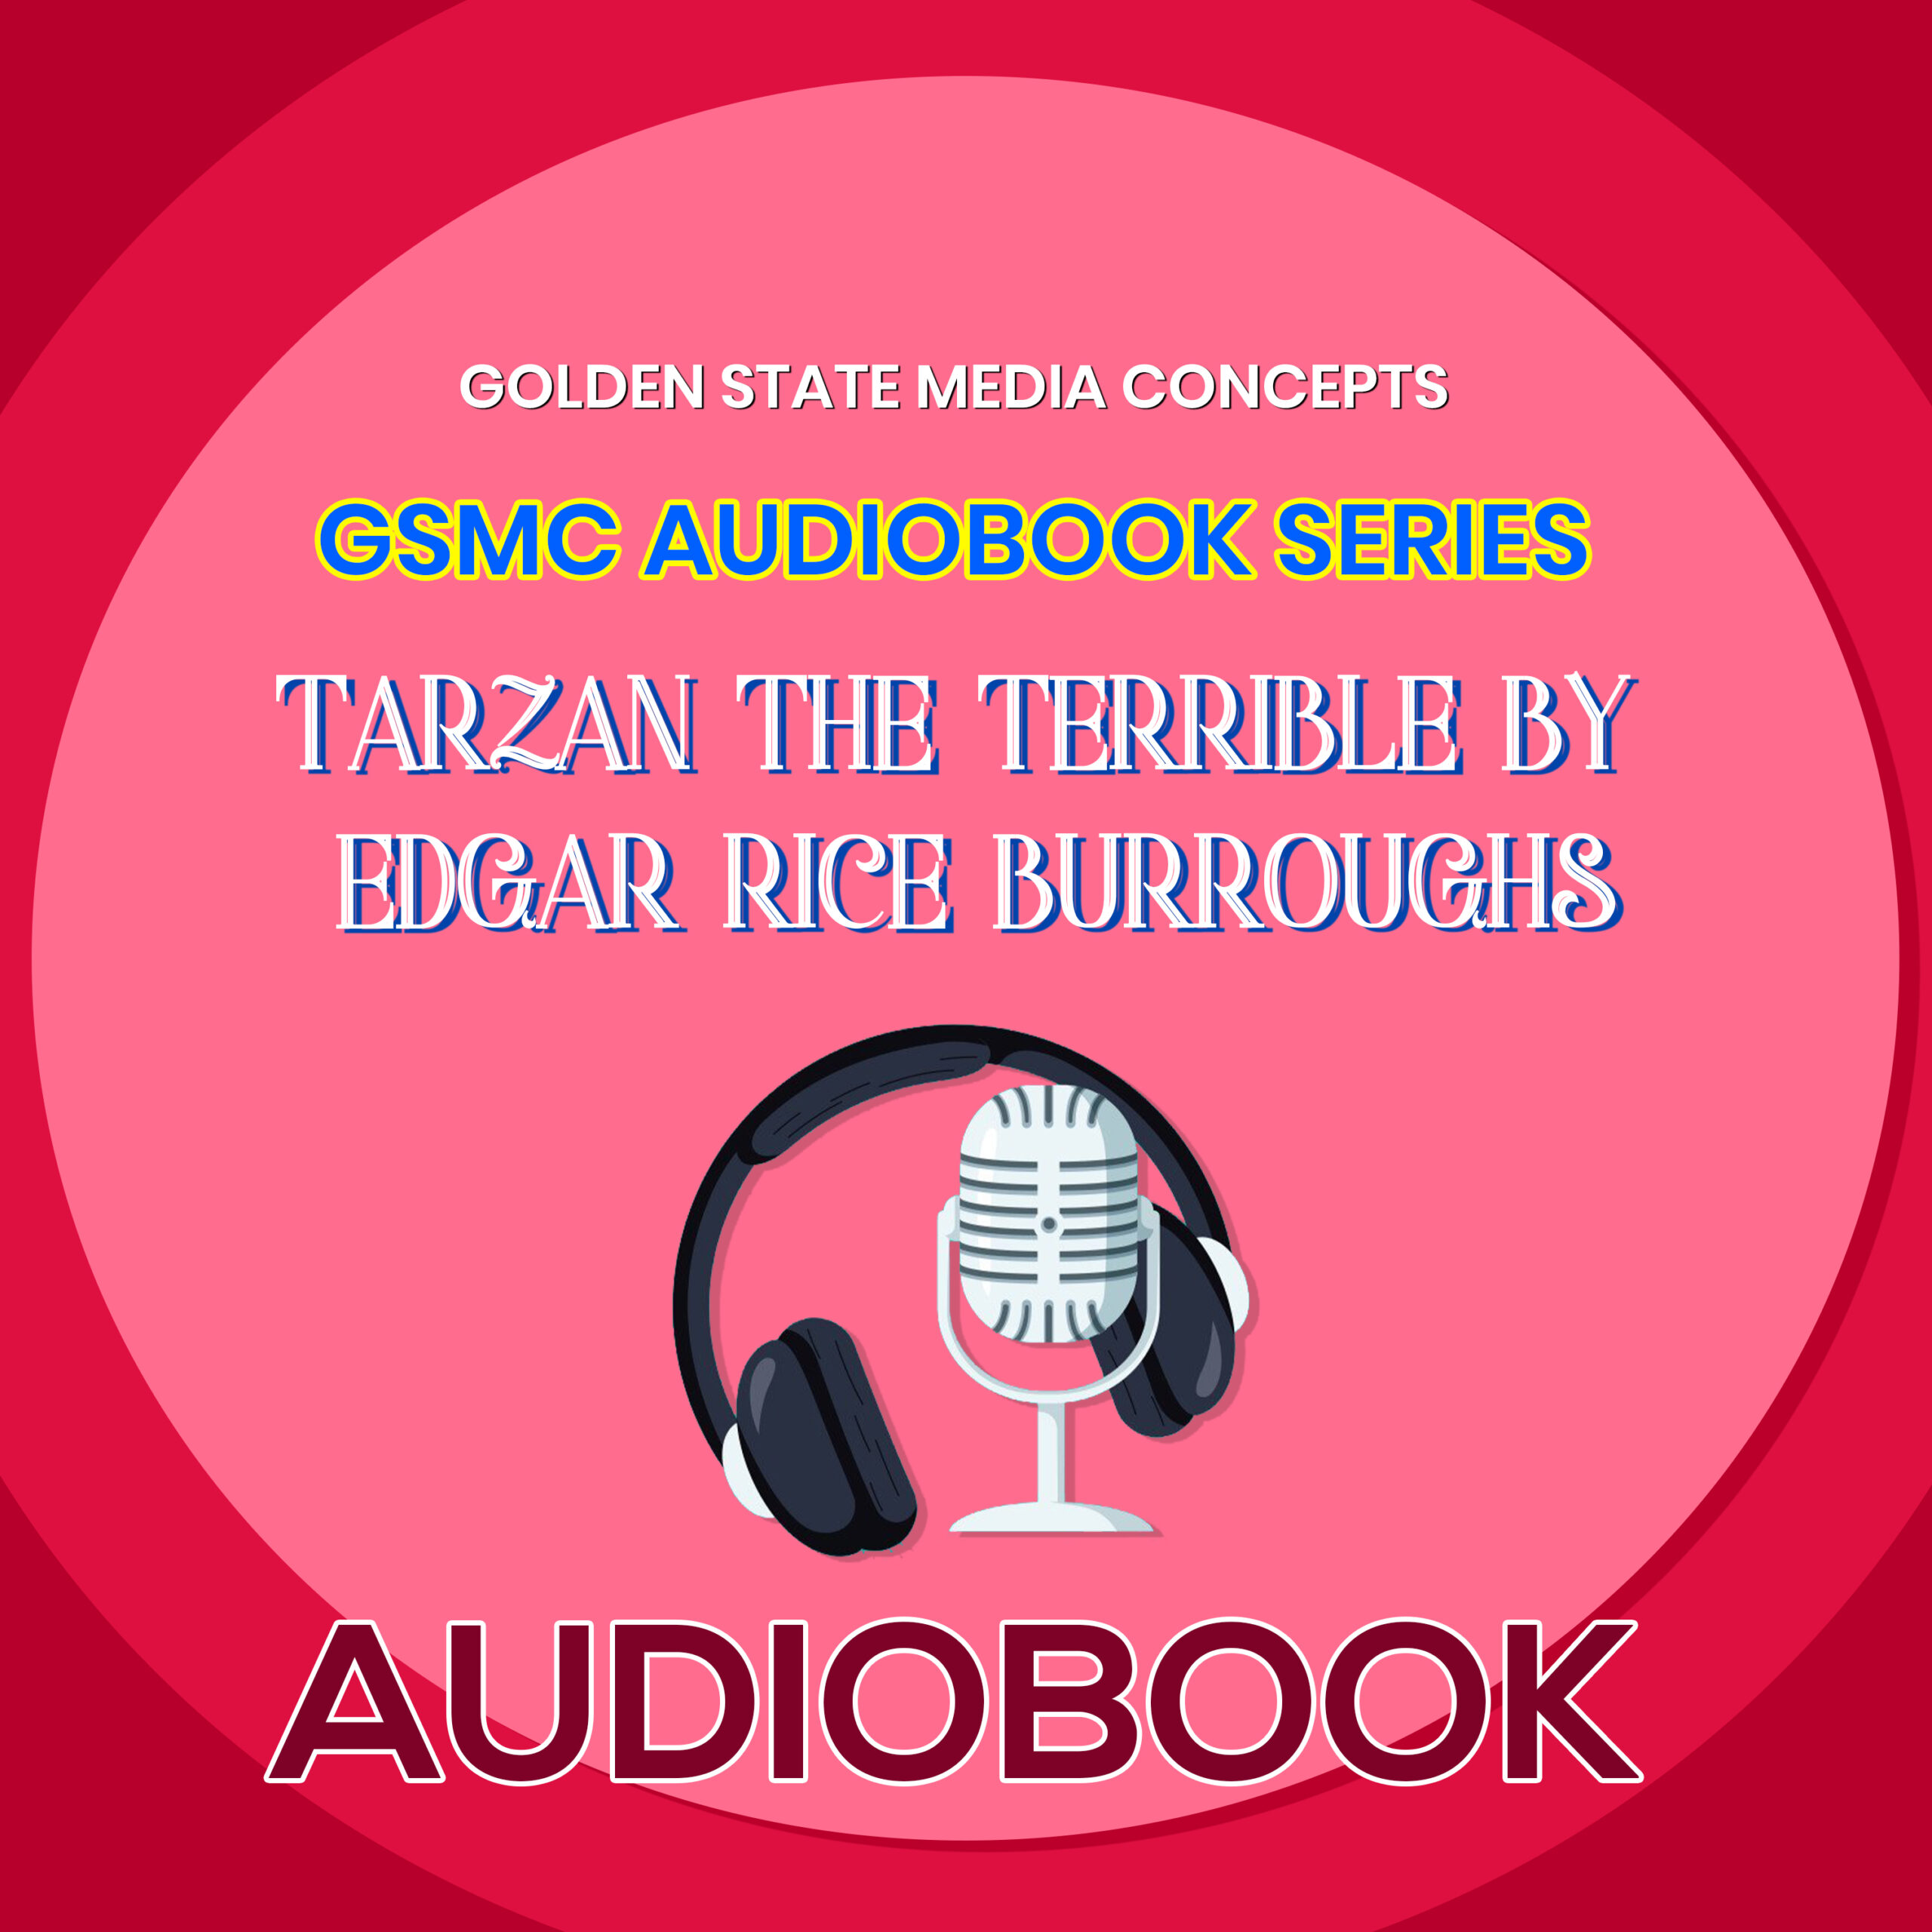 GSMC Audiobook Series: Tarzan the Terrible